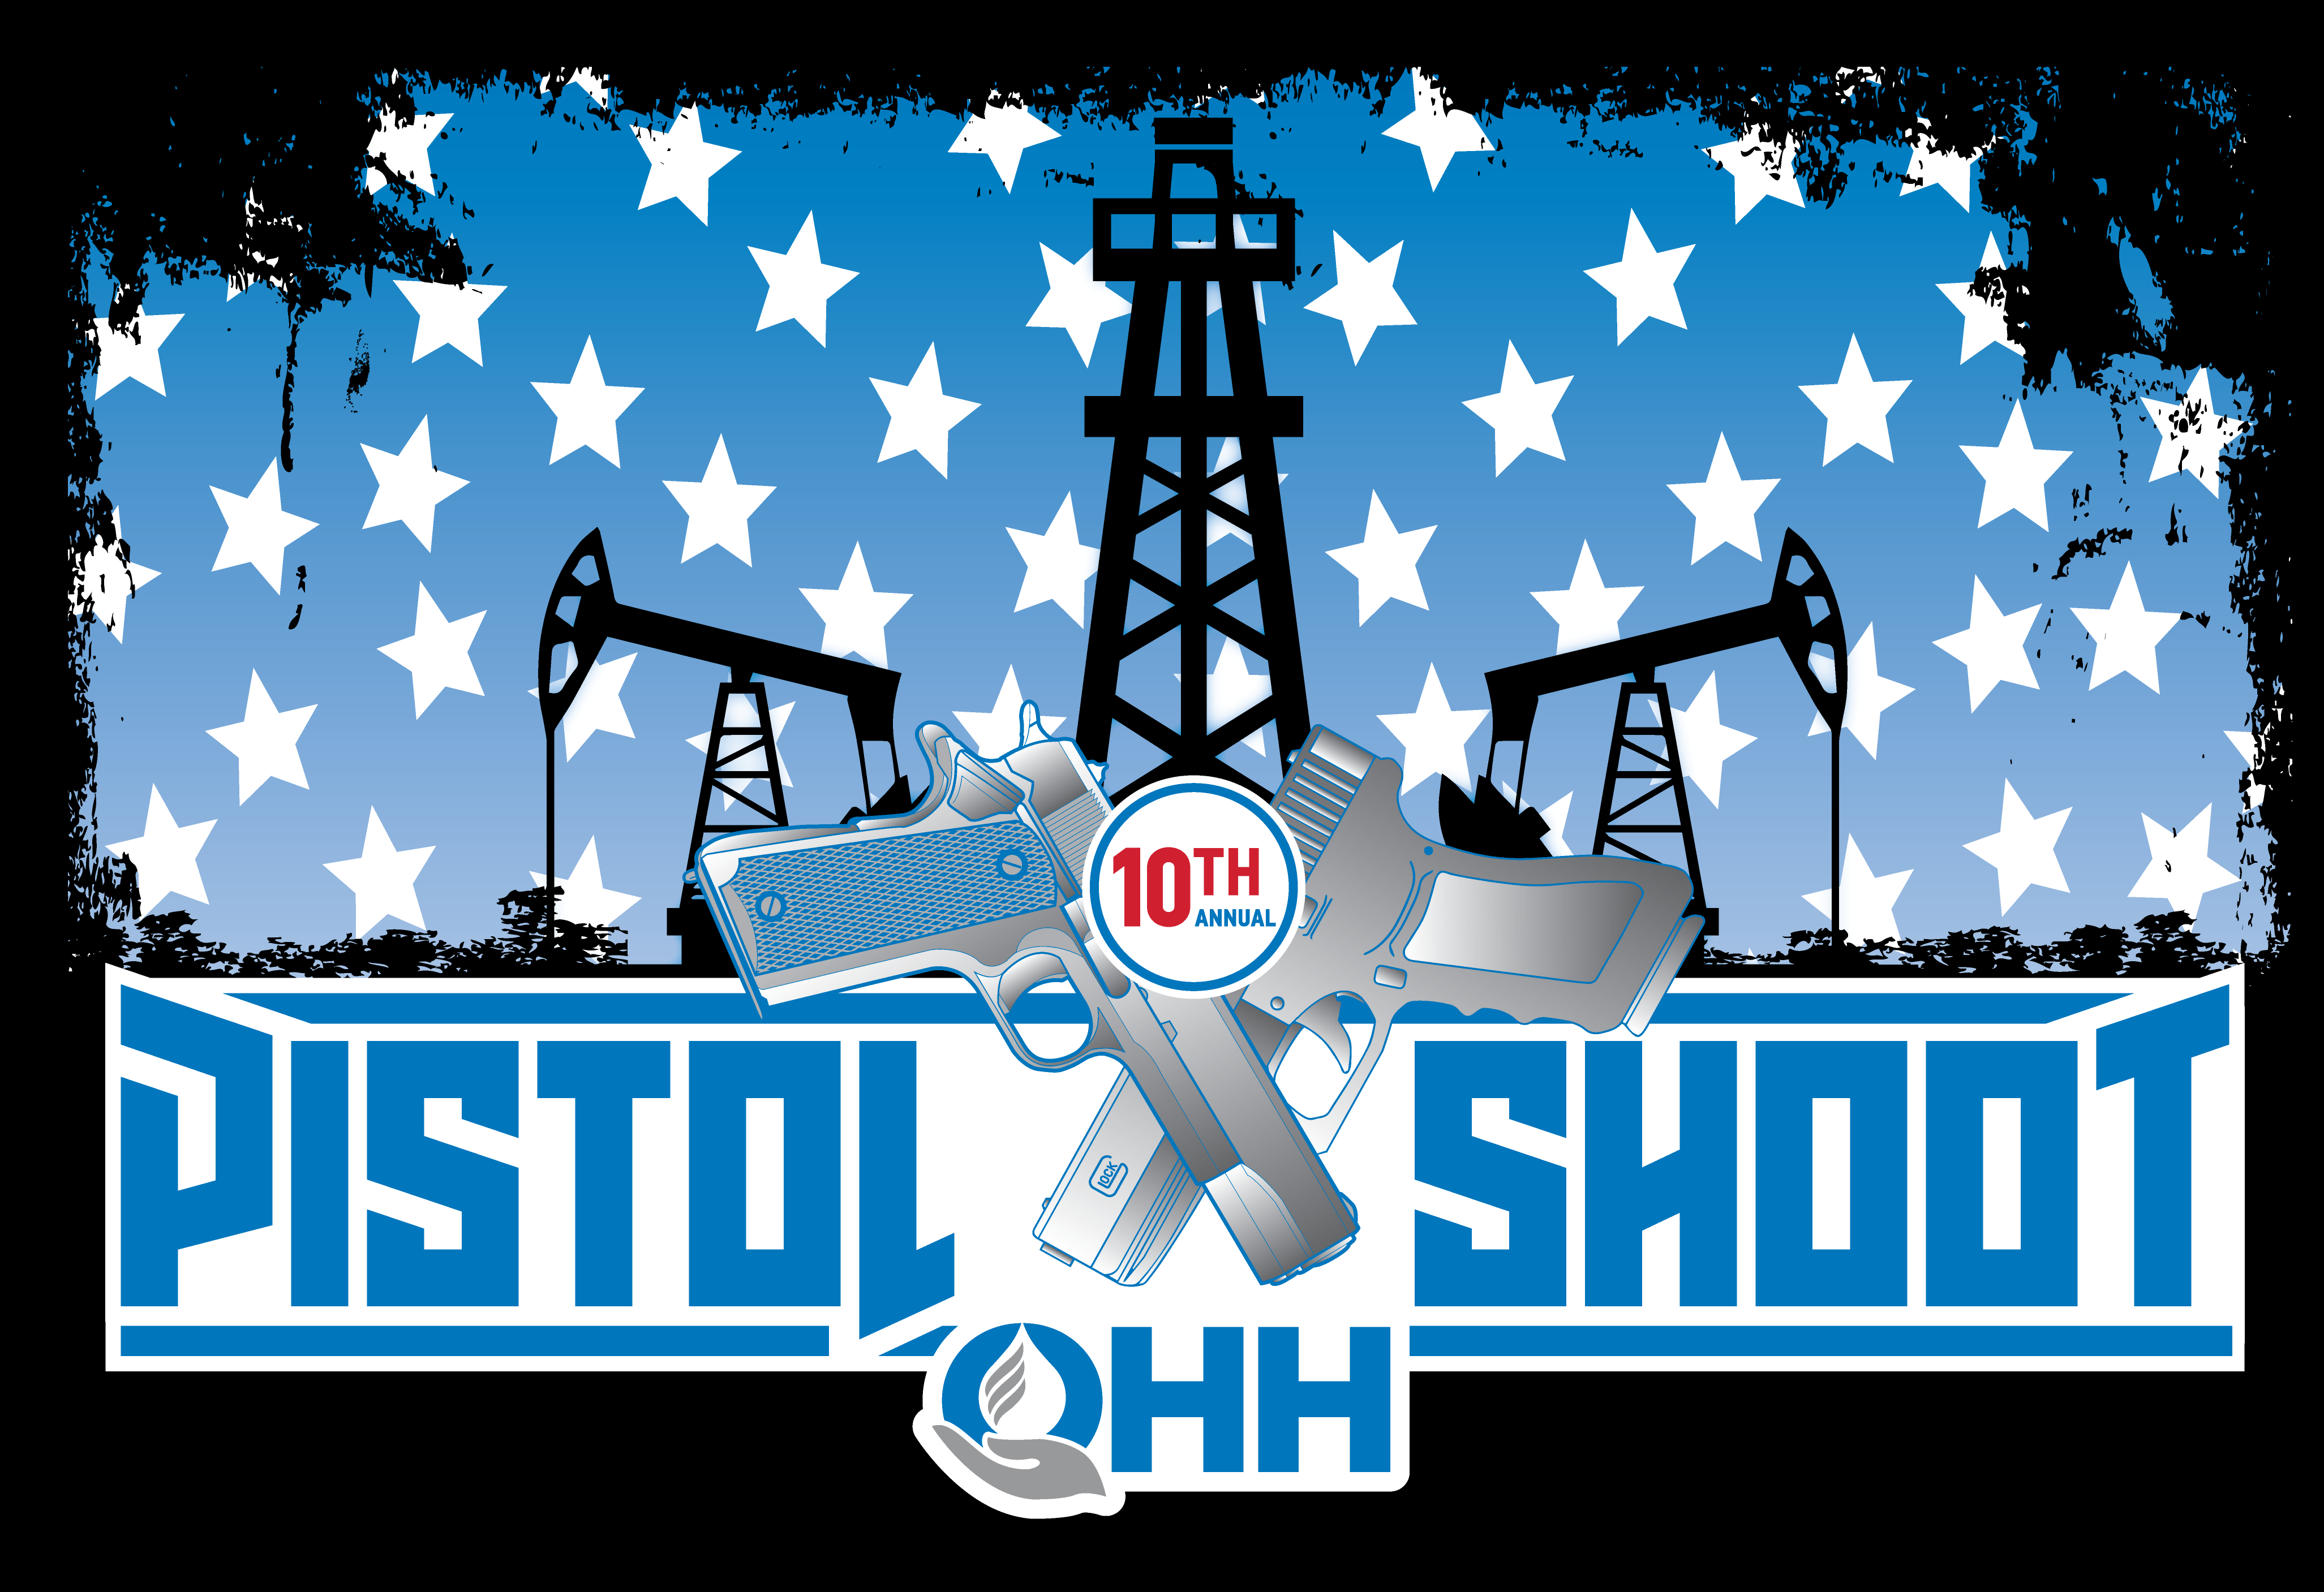 Shoot Helping 10th Hands Oilfield Annual - Houston Pistol Winter Fun